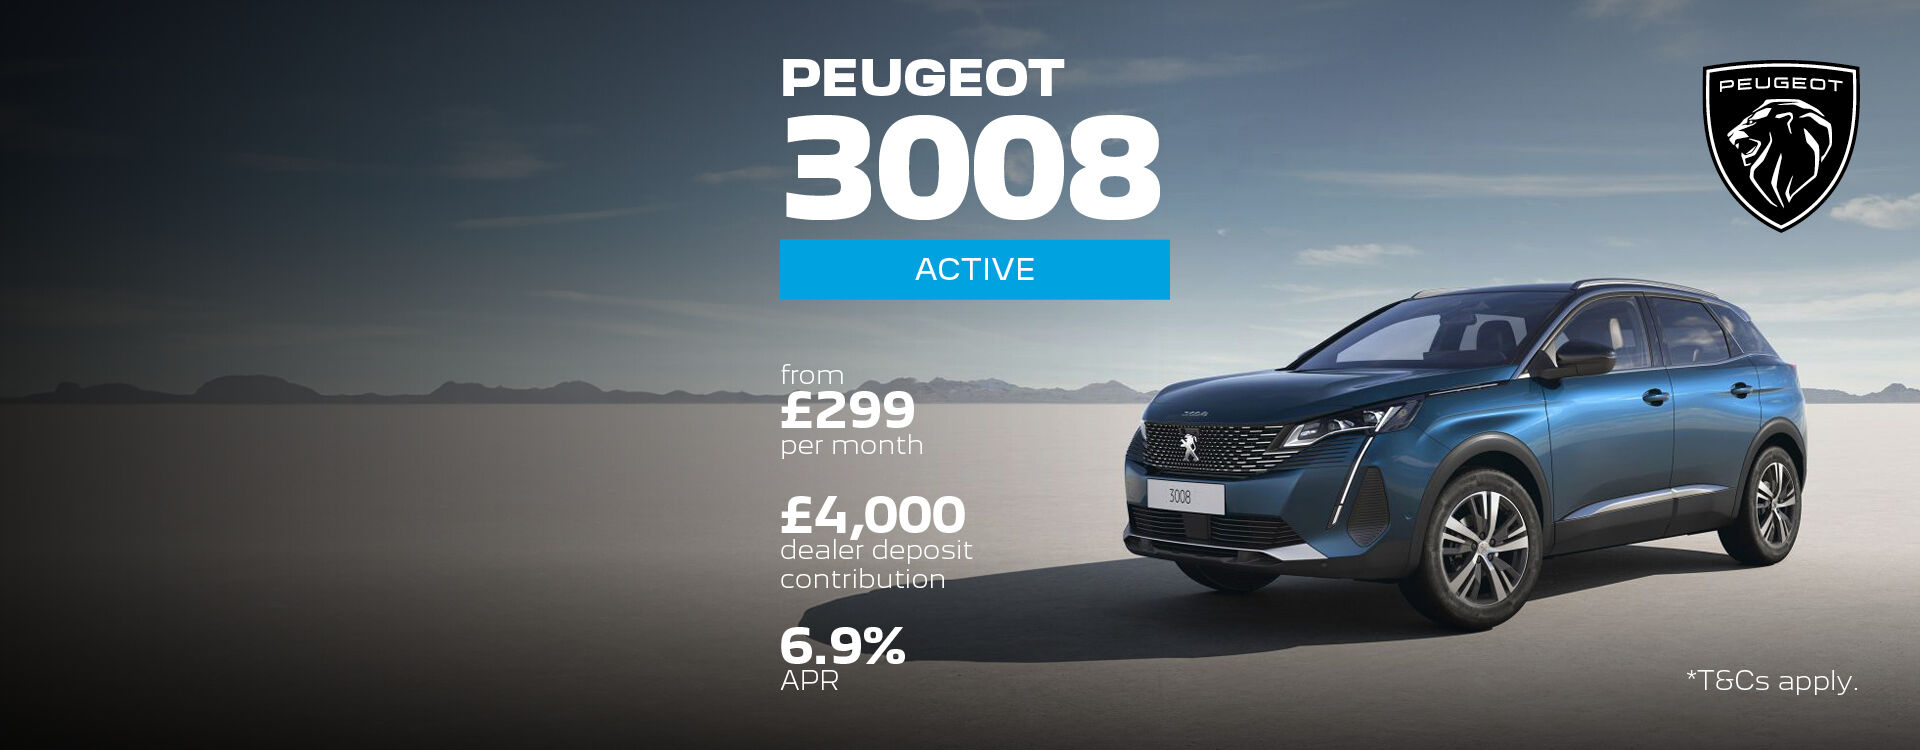 Peugeot Hero Image